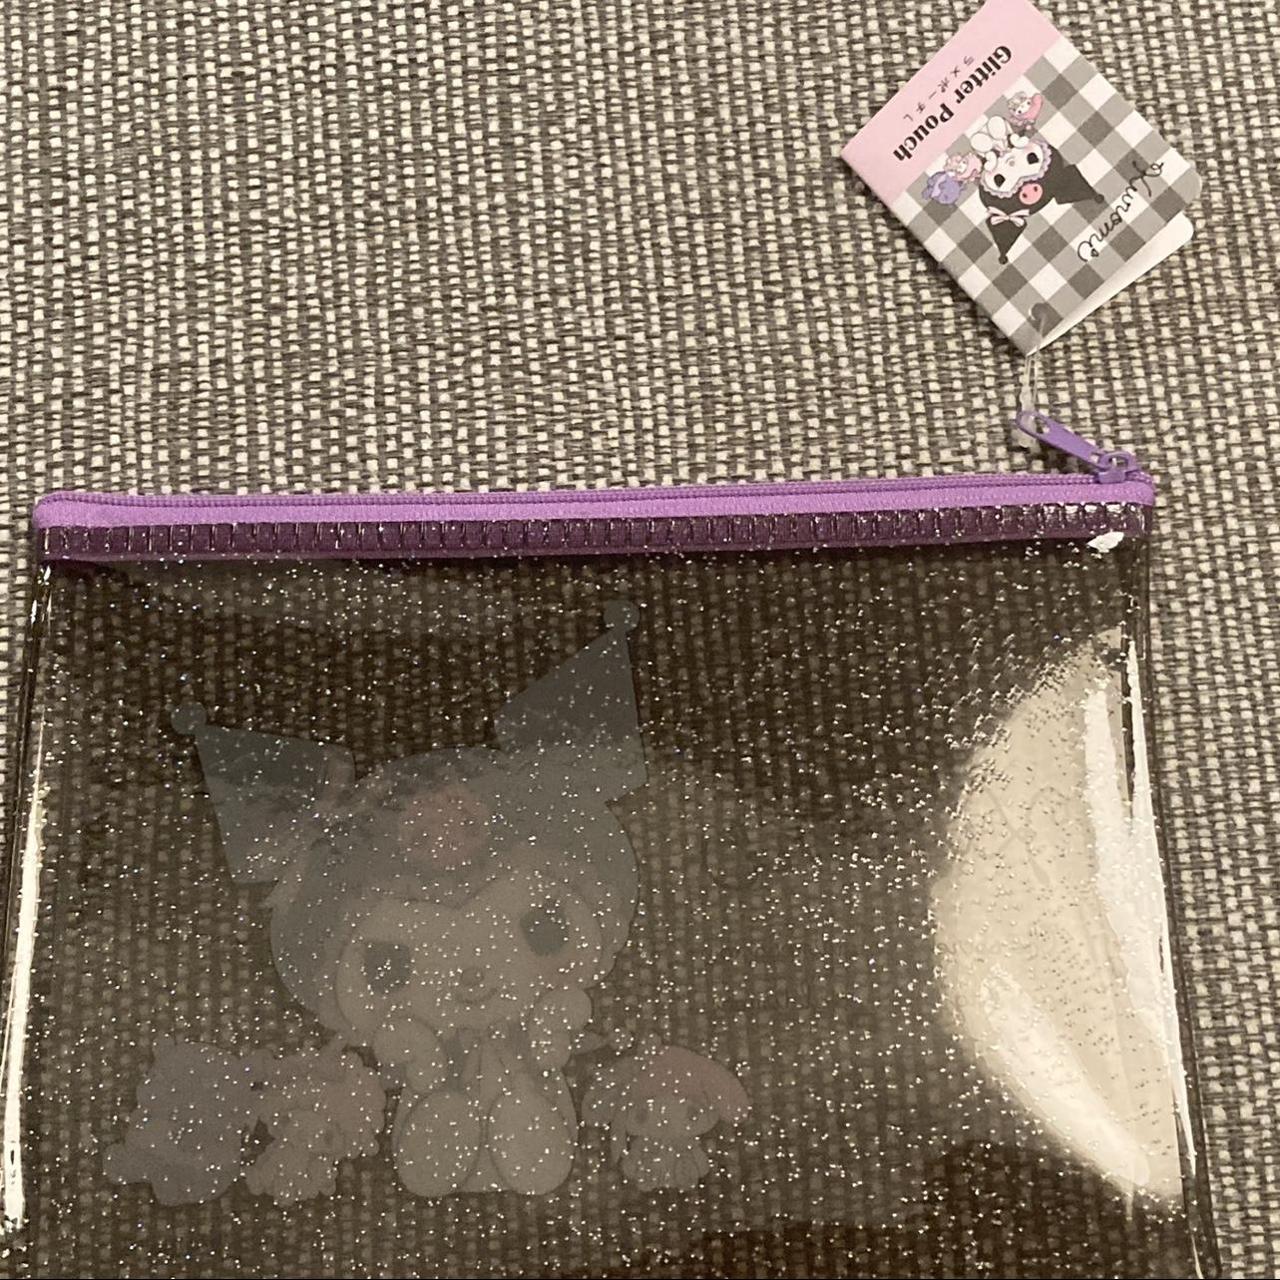 Kuromi Sanrio Pastel Purple Star Pouch, Pencil case - Depop